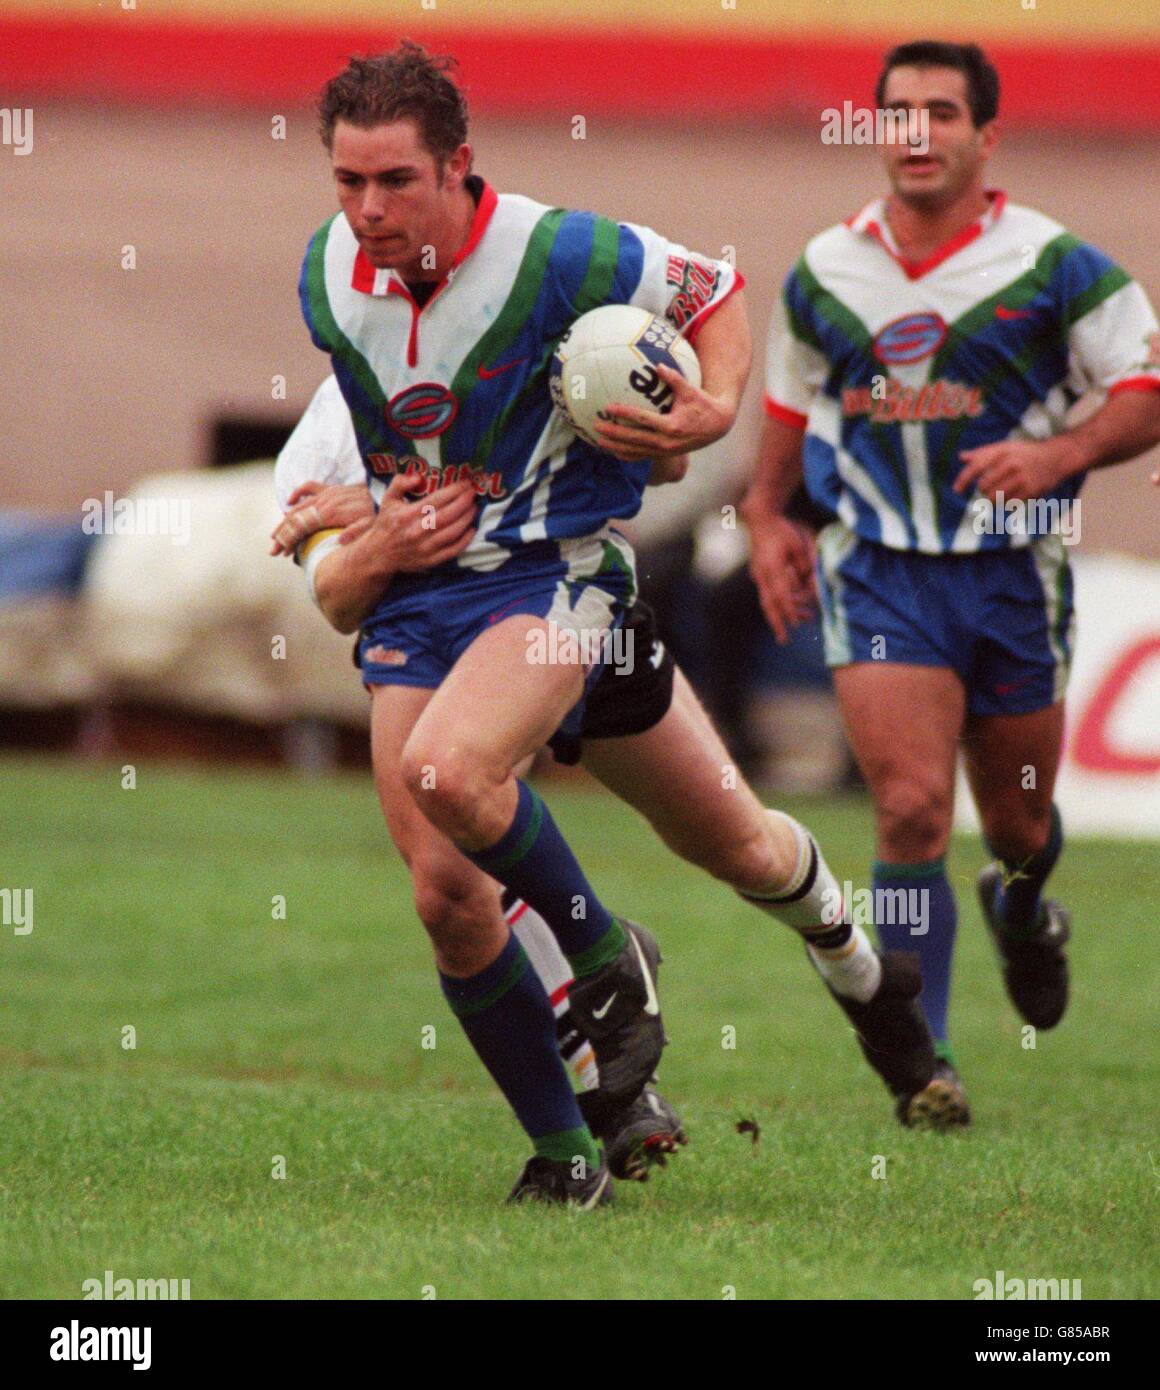 Ligue de rugby. Paul Staladi, Auckland Warriors Banque D'Images